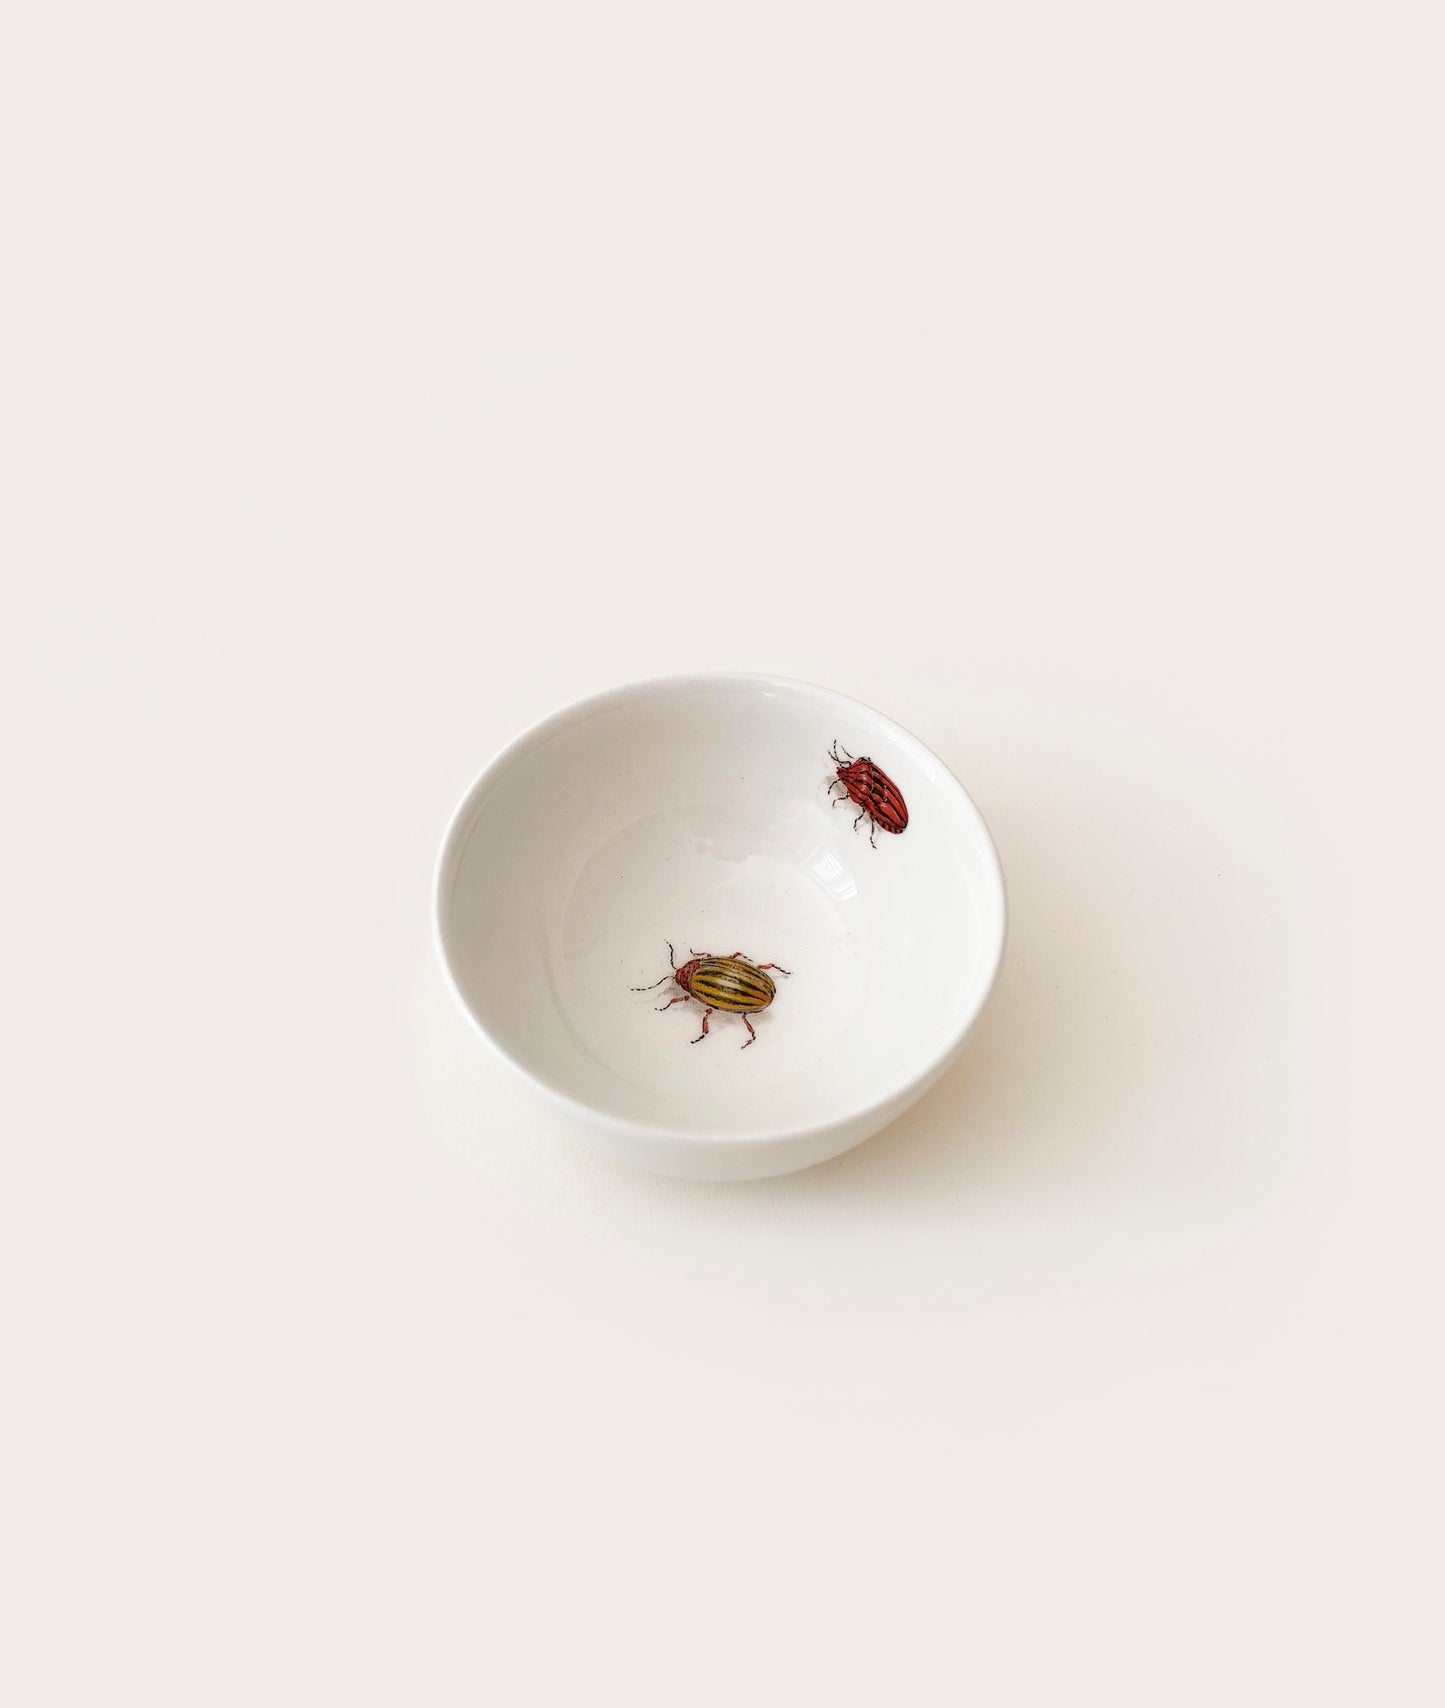 Tiny Bowl with Bug Trompe L'oeil